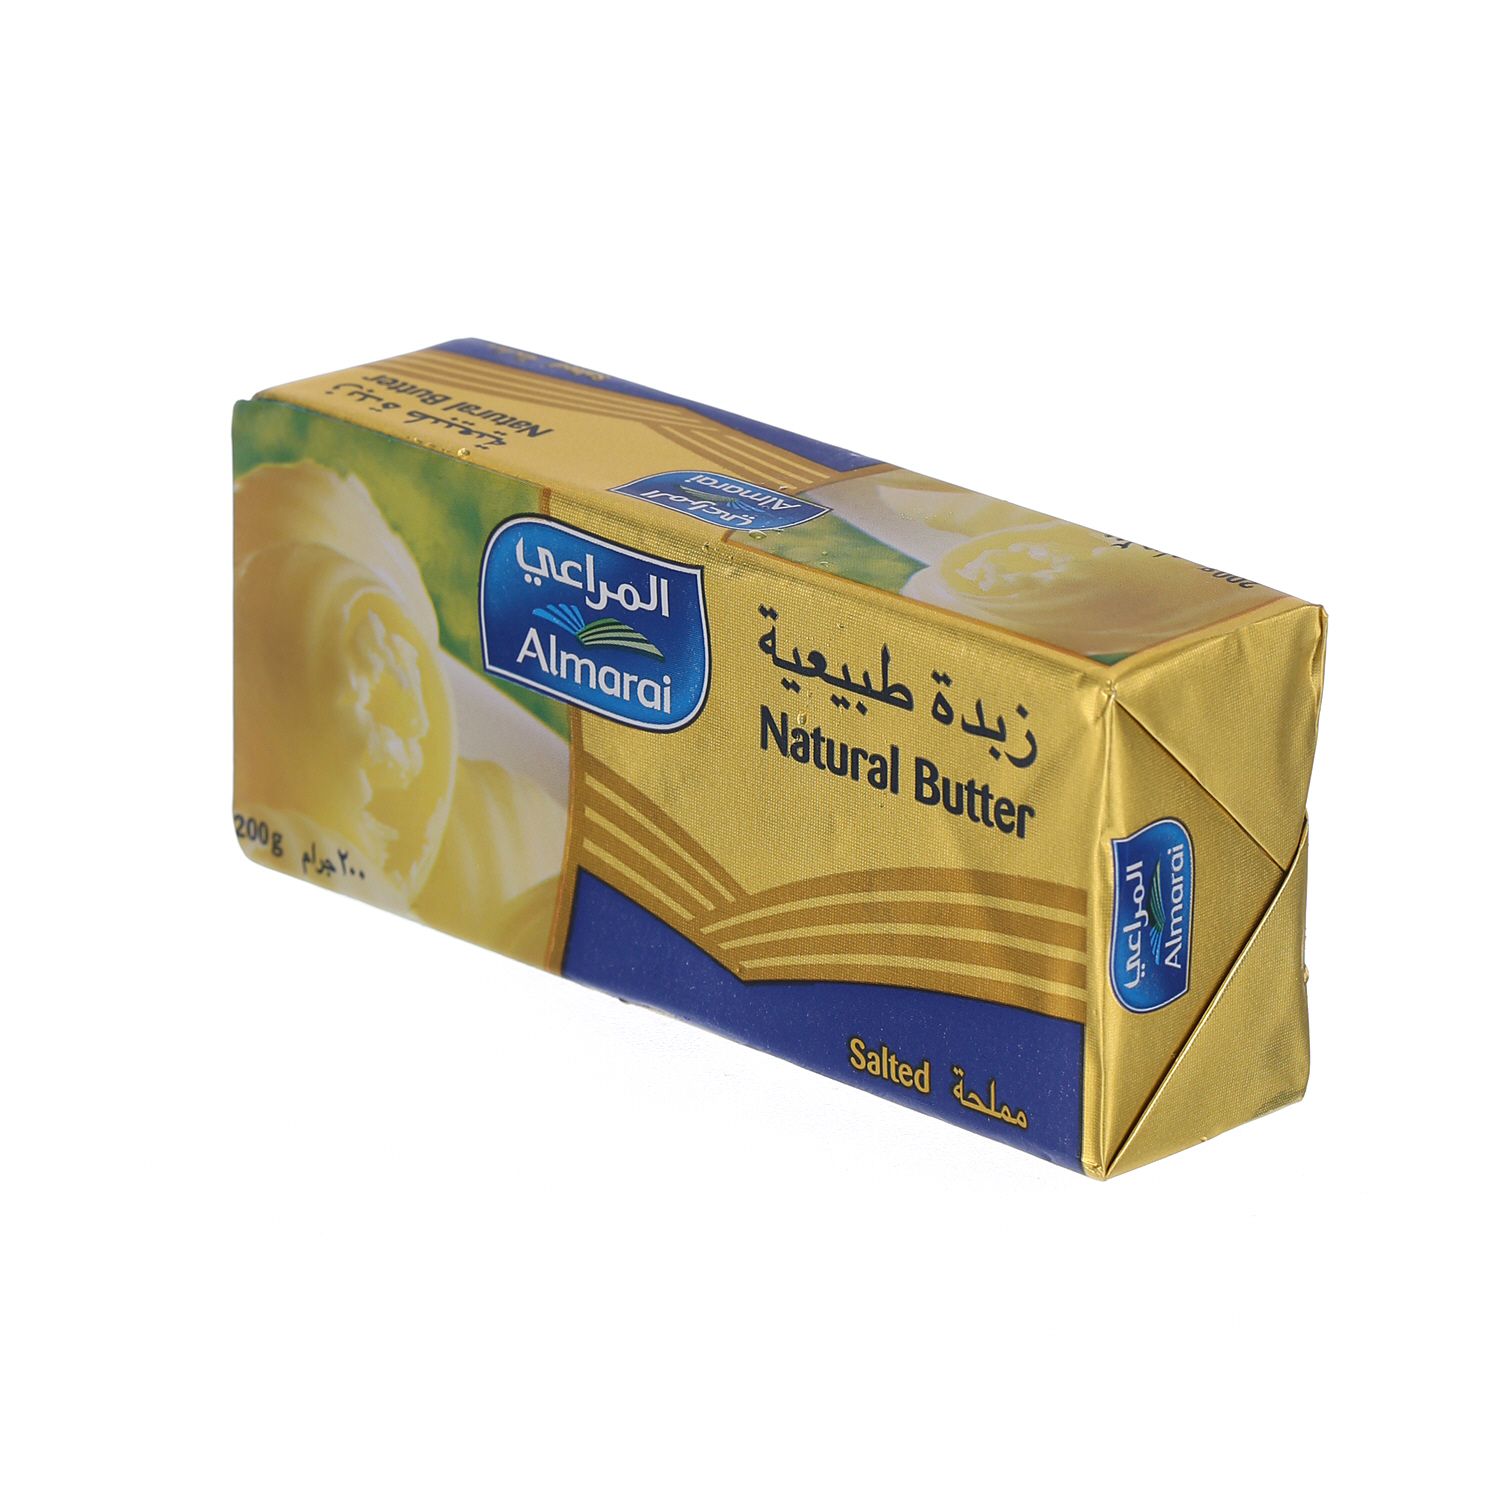 Al Marai Natural Butter Salted 200 g